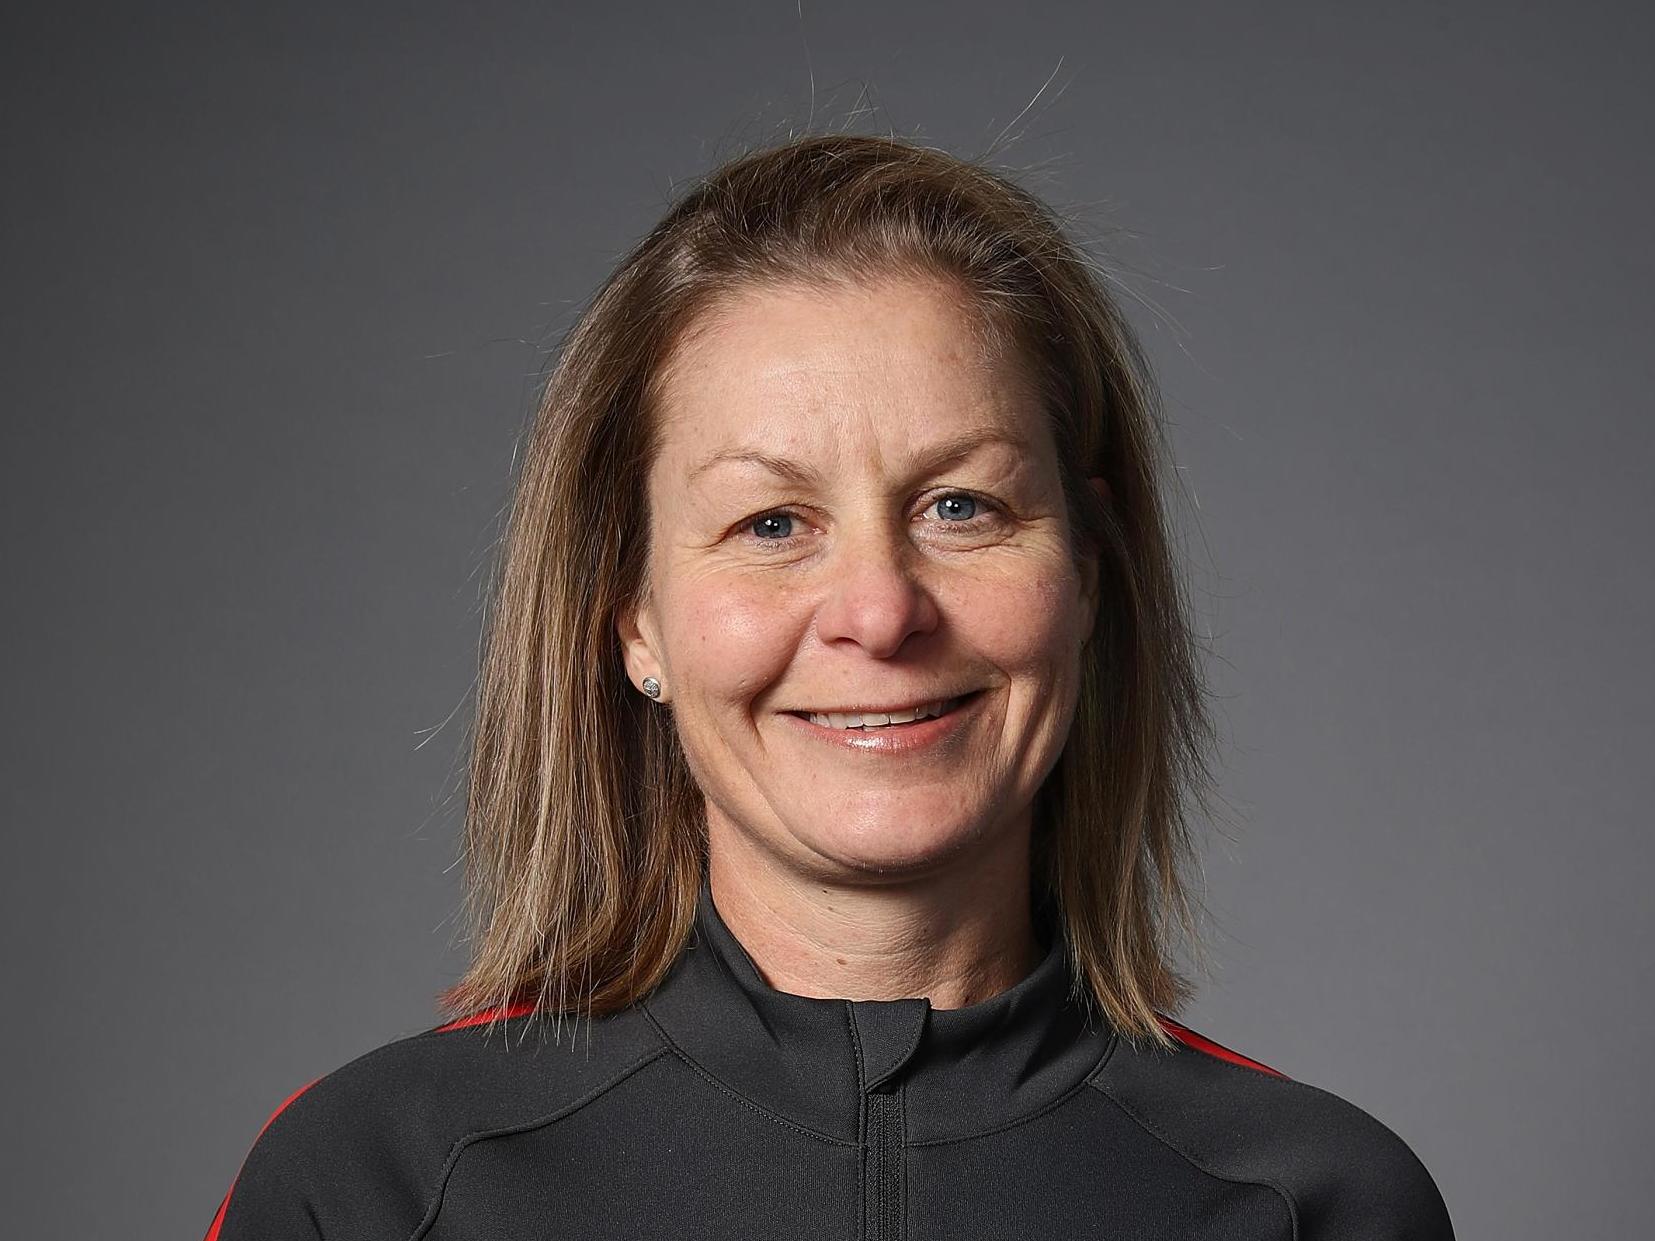 Sara Symington will lead British Athletics' performance strategy